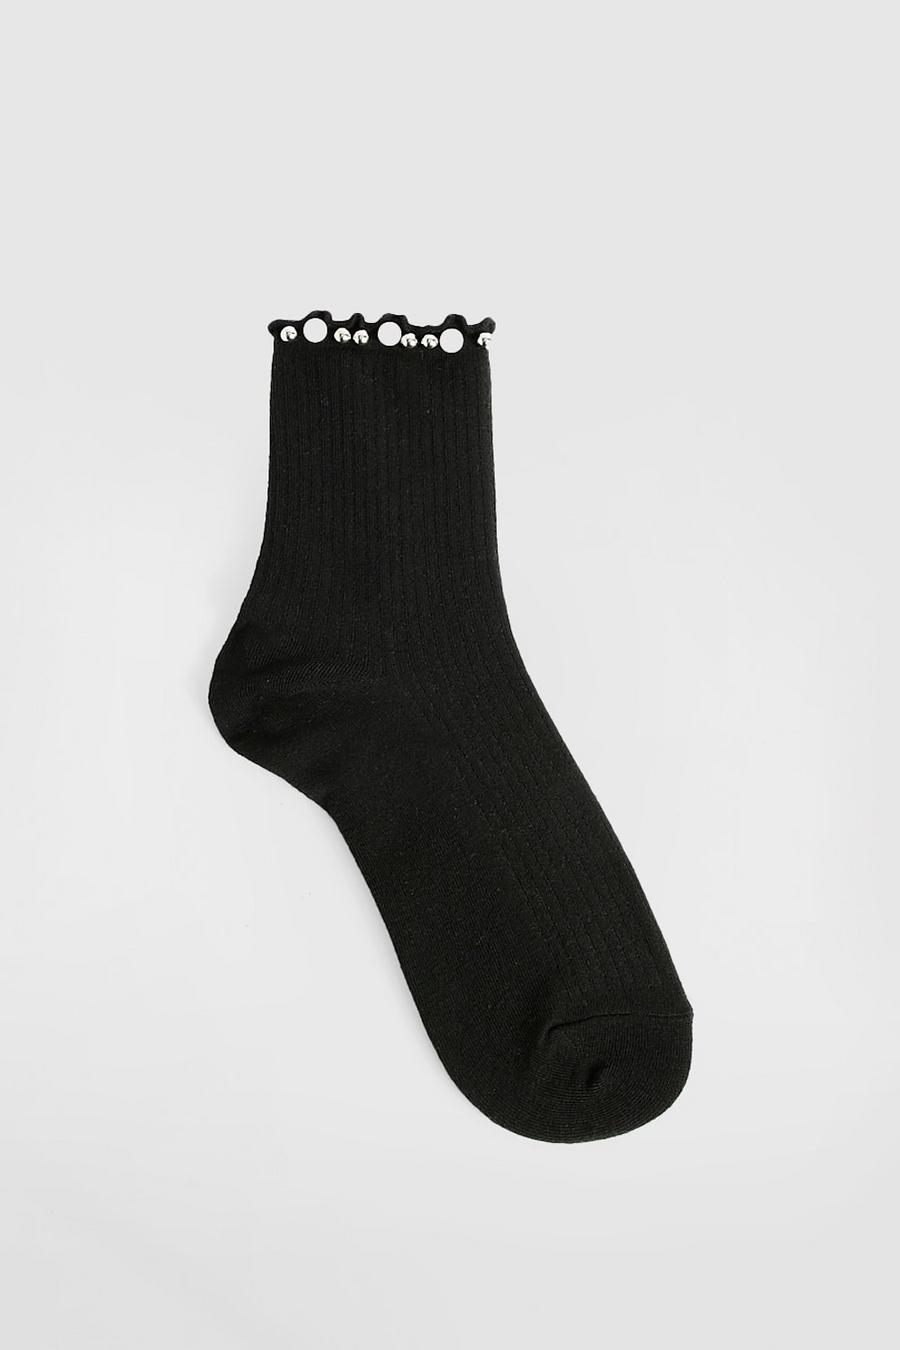 Schwarze verzierte Socken, Black